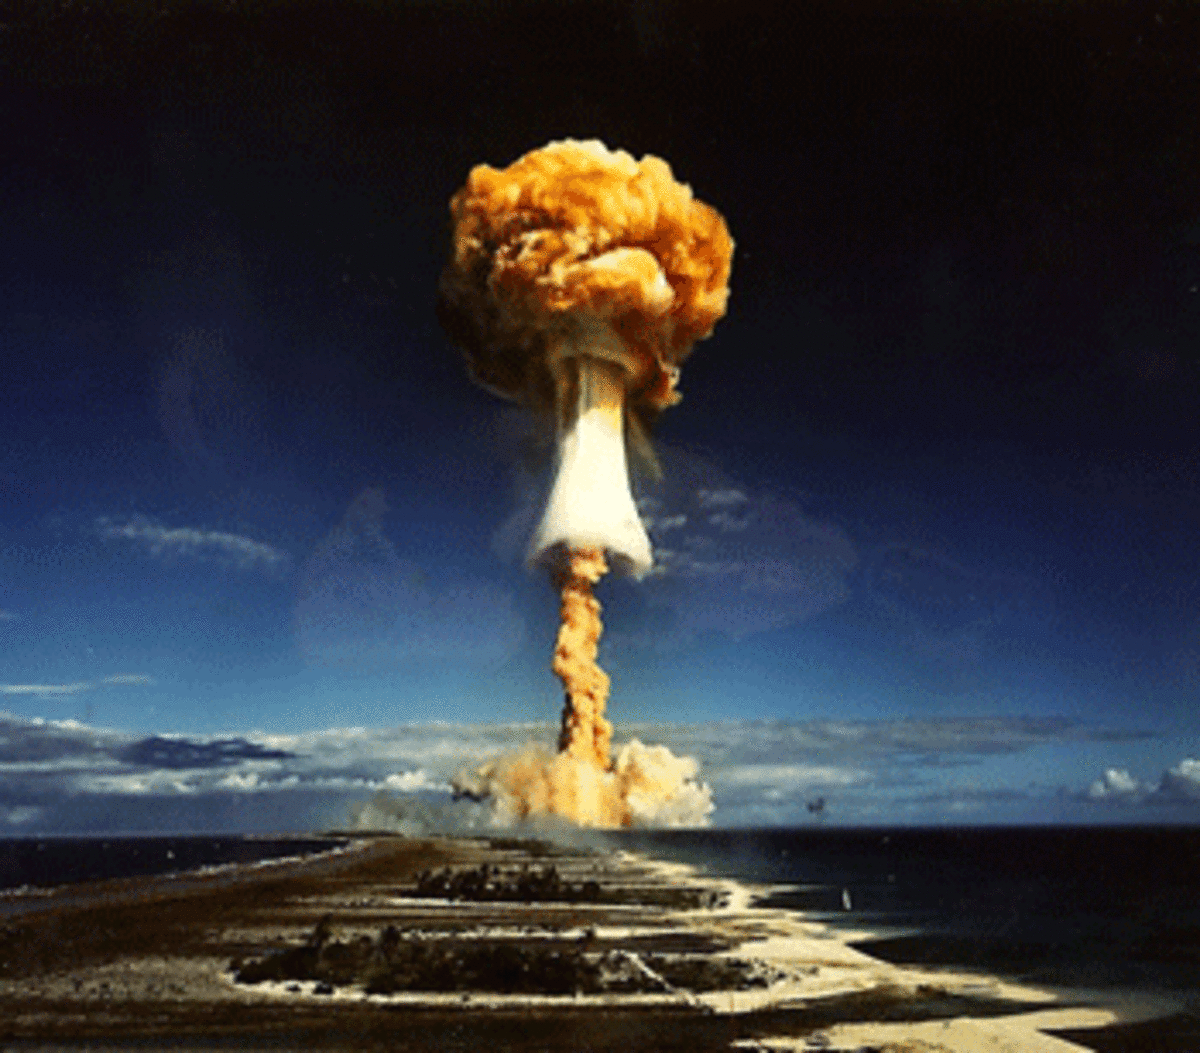 atmospheric nuclear test